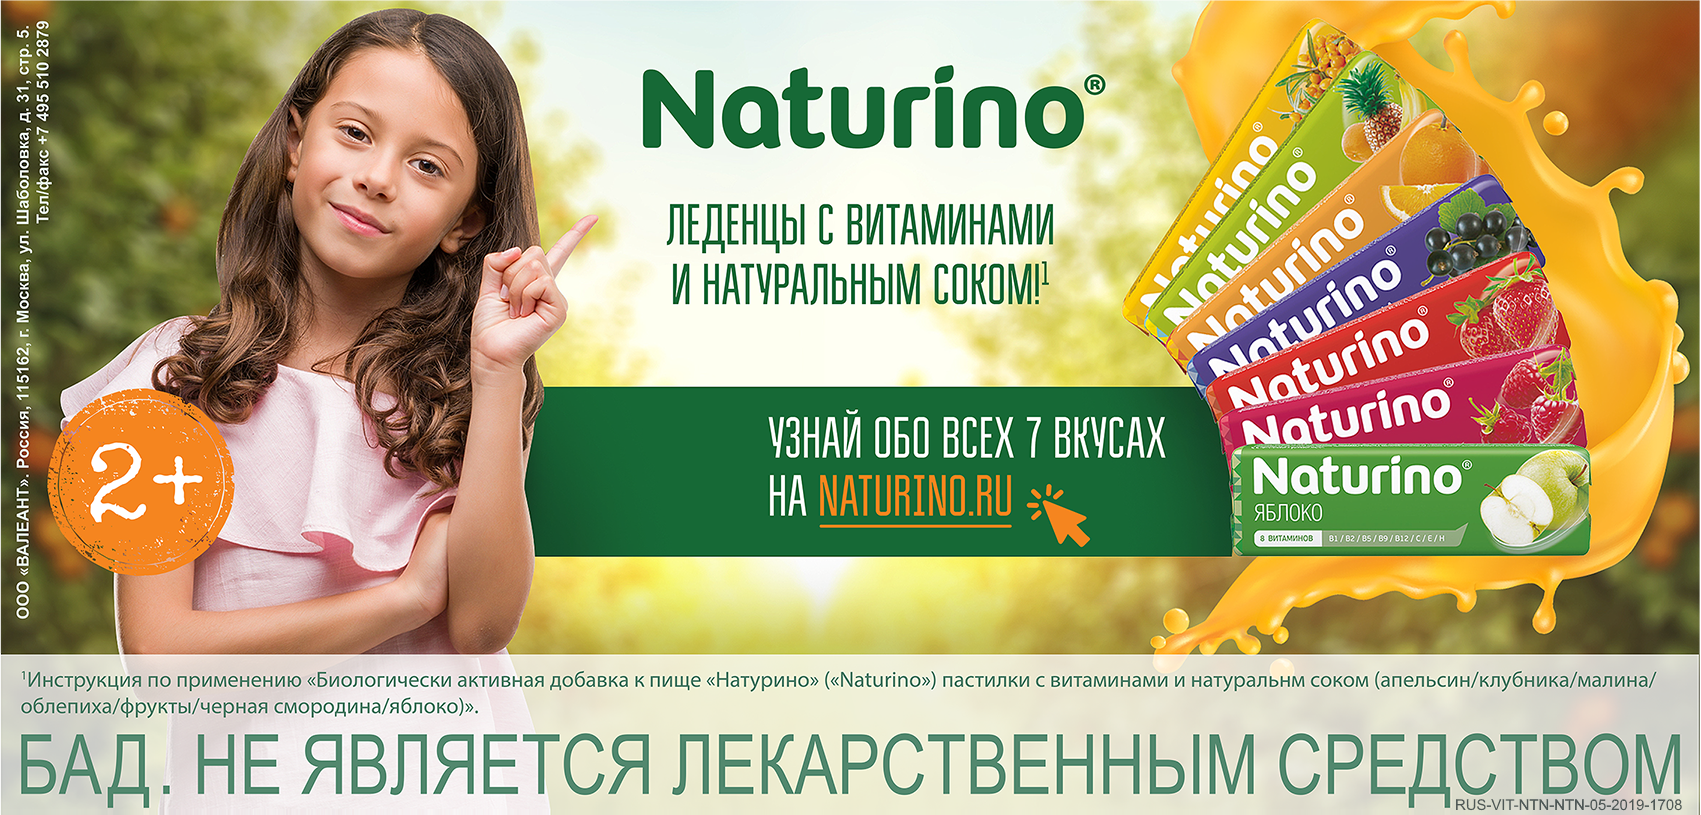 naturino.ru